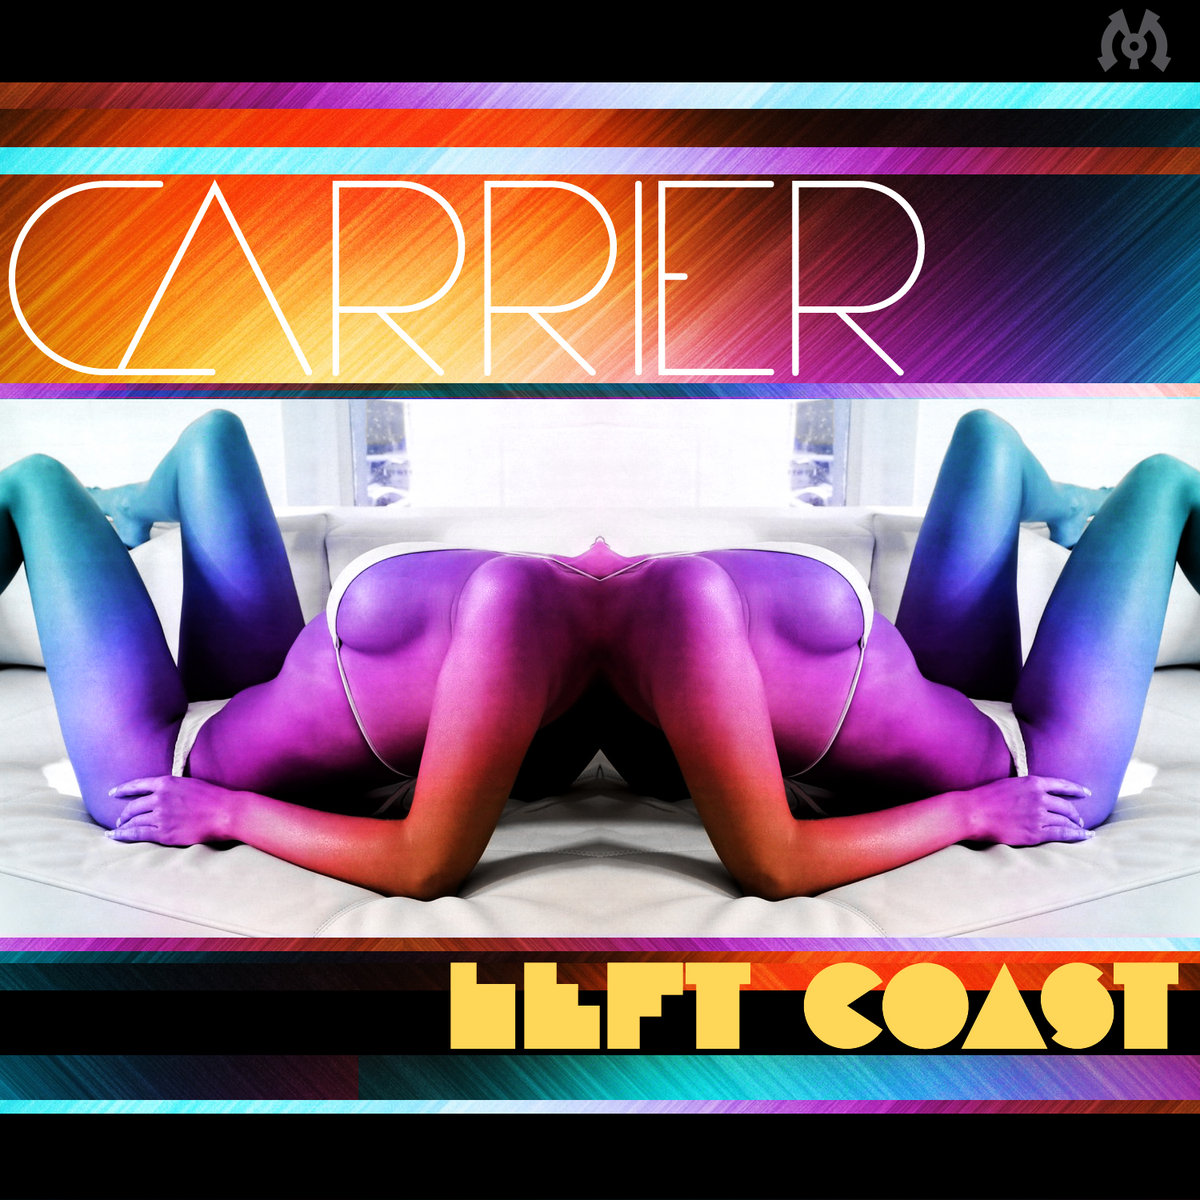 Carrier - Left Coast @ 'Left Coast' album (electronic, dubstep)